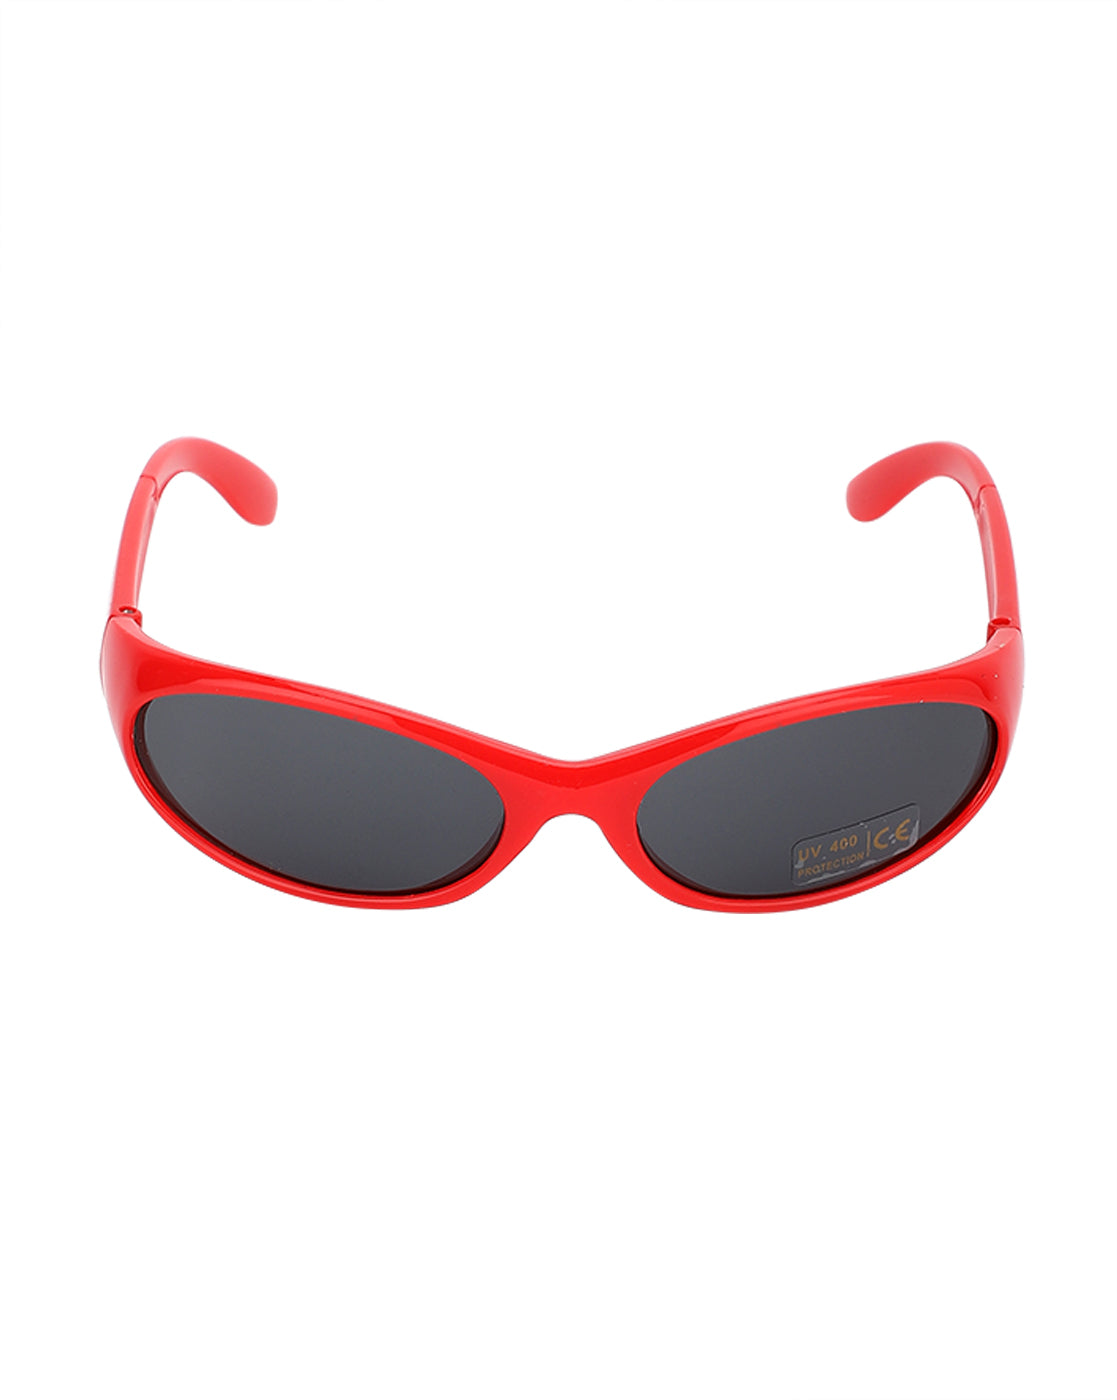 Carlton London Uv Protected Lens Oval Sunglasses For Boy